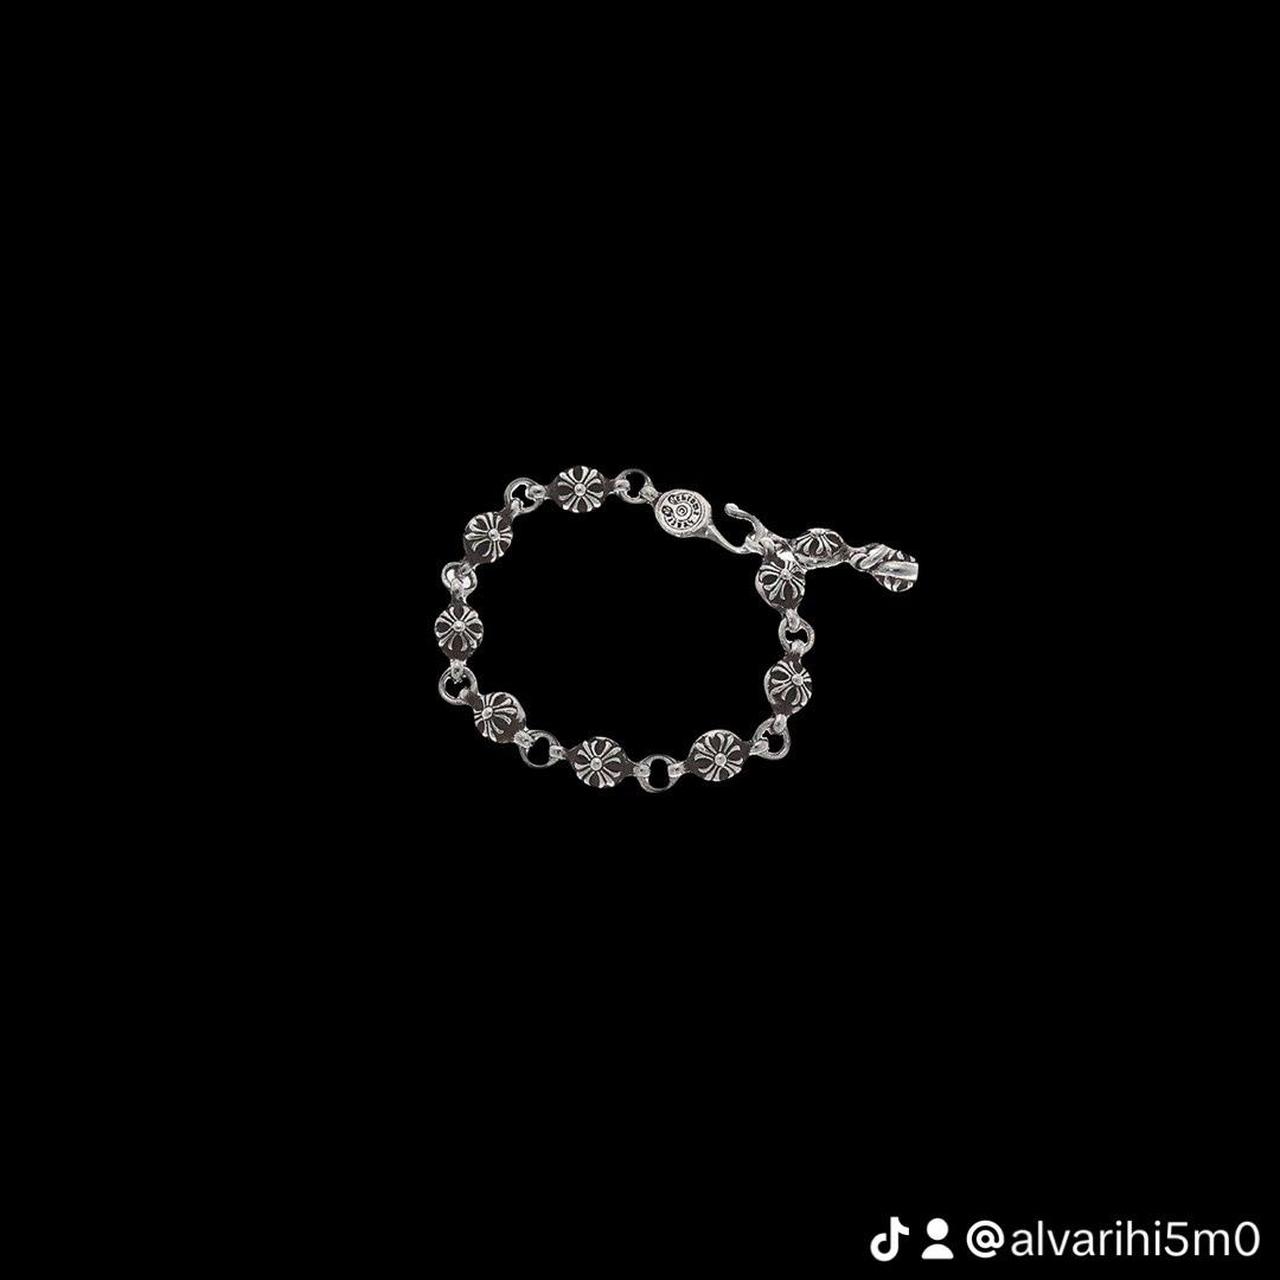 Chrome hearts-jewelry - Depop